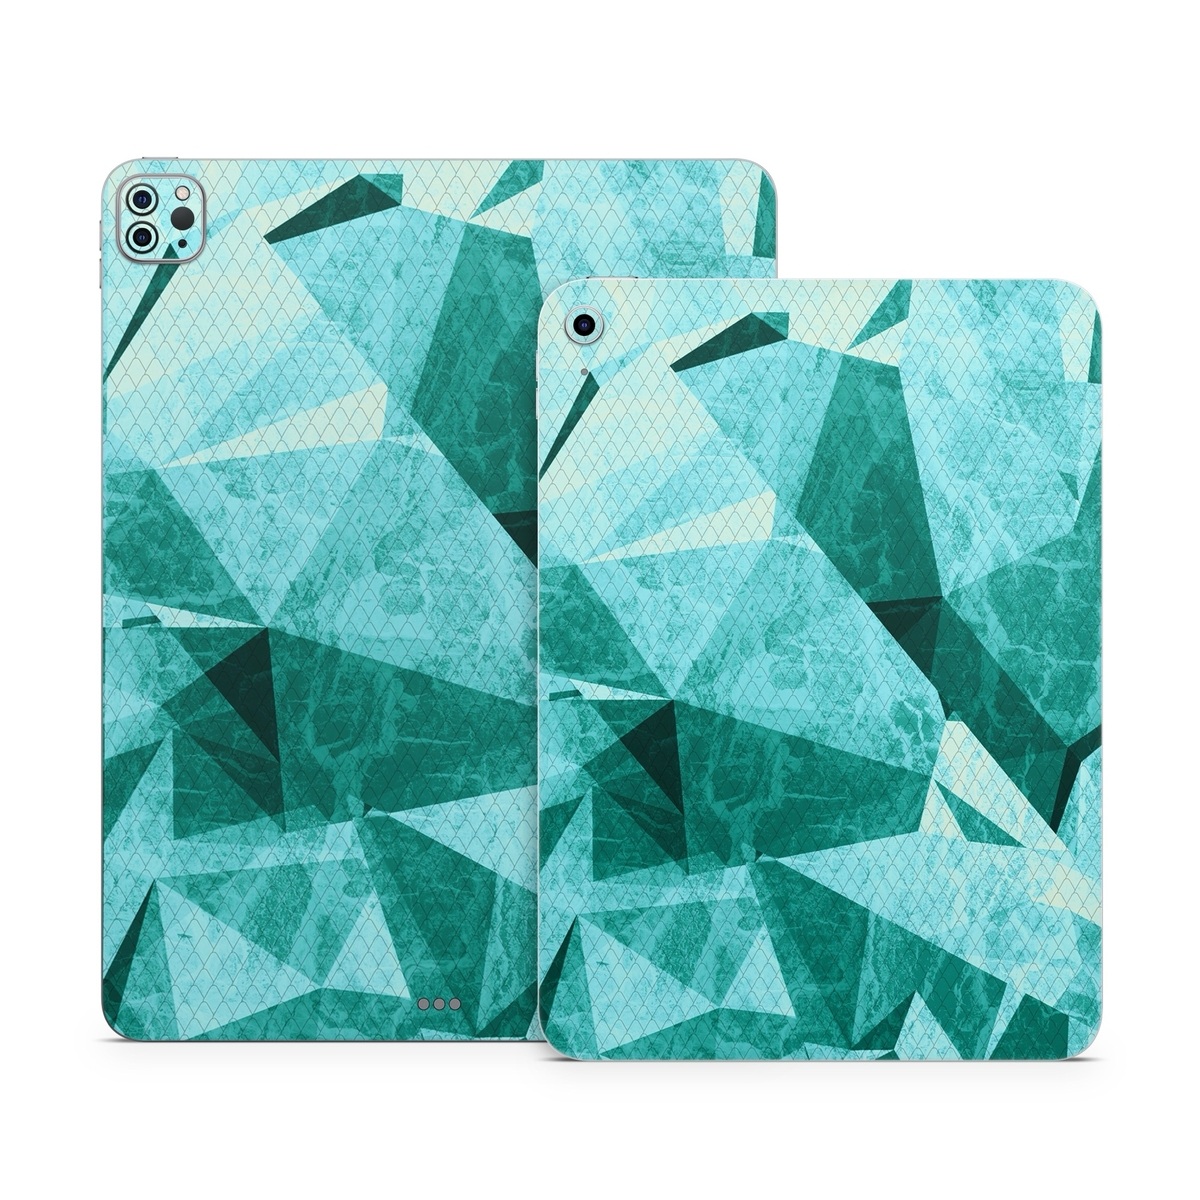 Apple iPad Series Skin design of Aqua, Blue, Pattern, Turquoise, Illustration, Teal, Design, Line, Graphic design, with blue colors